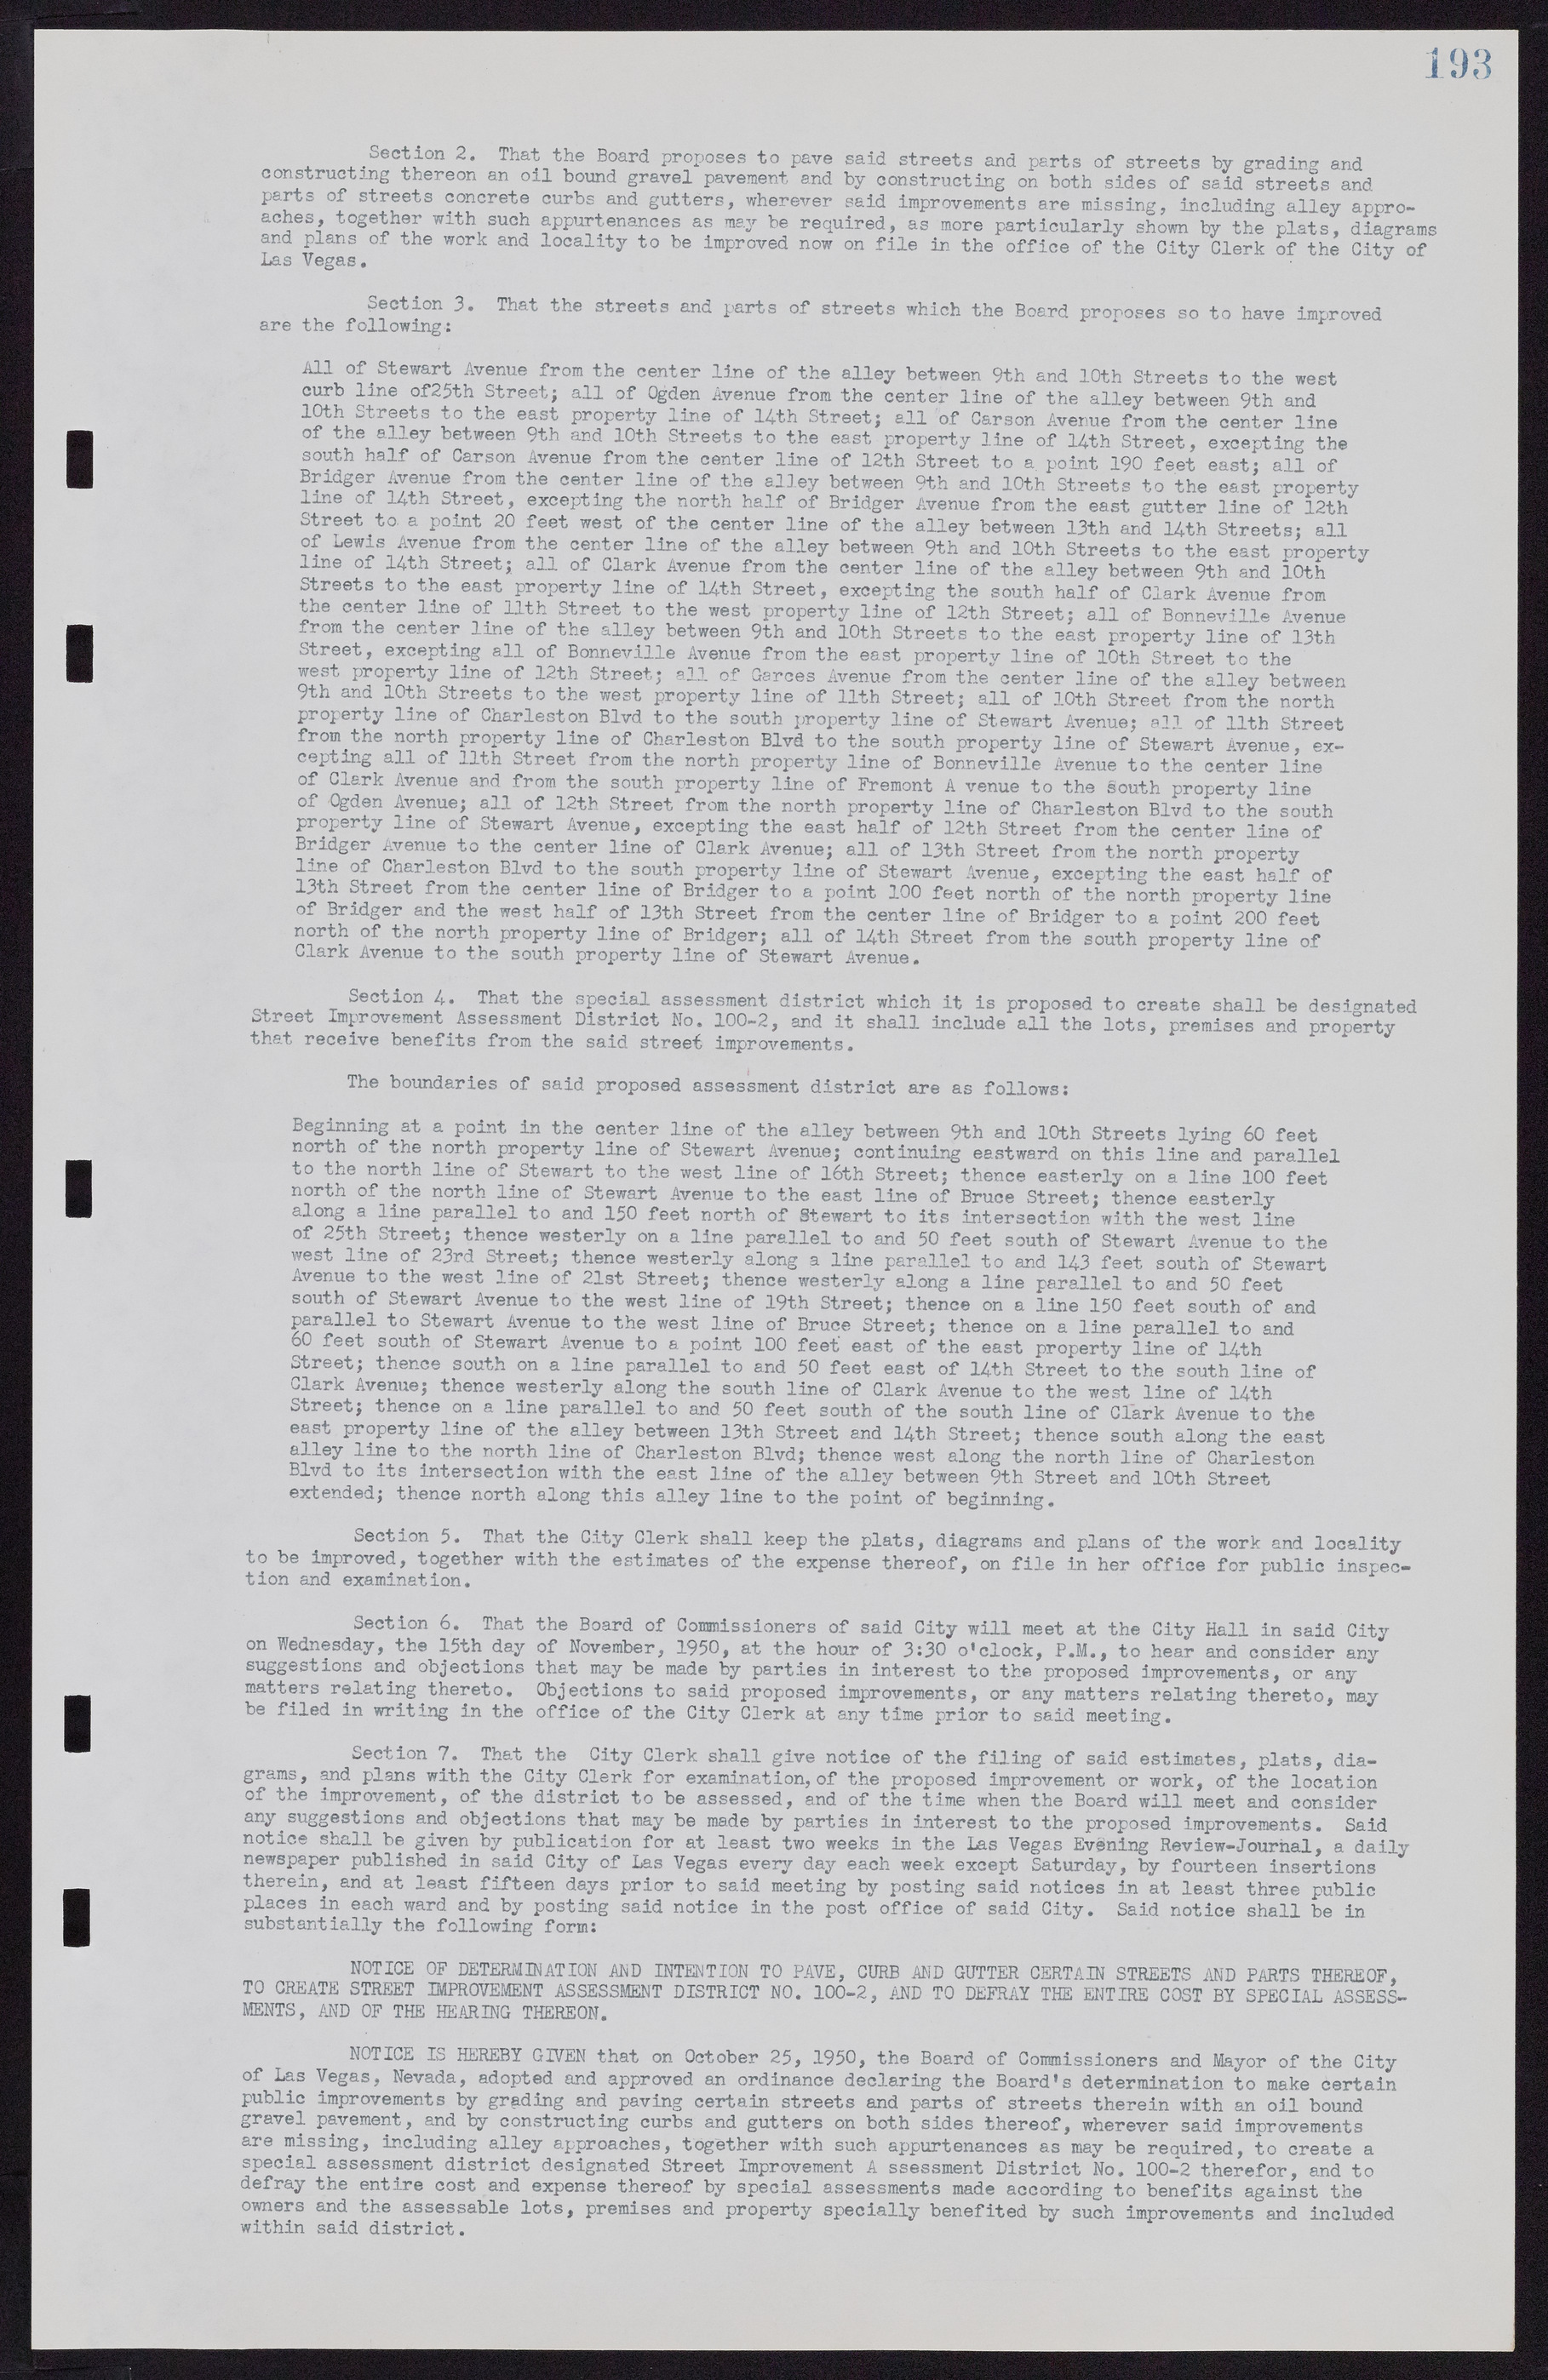 Las Vegas City Commission Minutes, November 7, 1949 to May 21, 1952, lvc000007-203